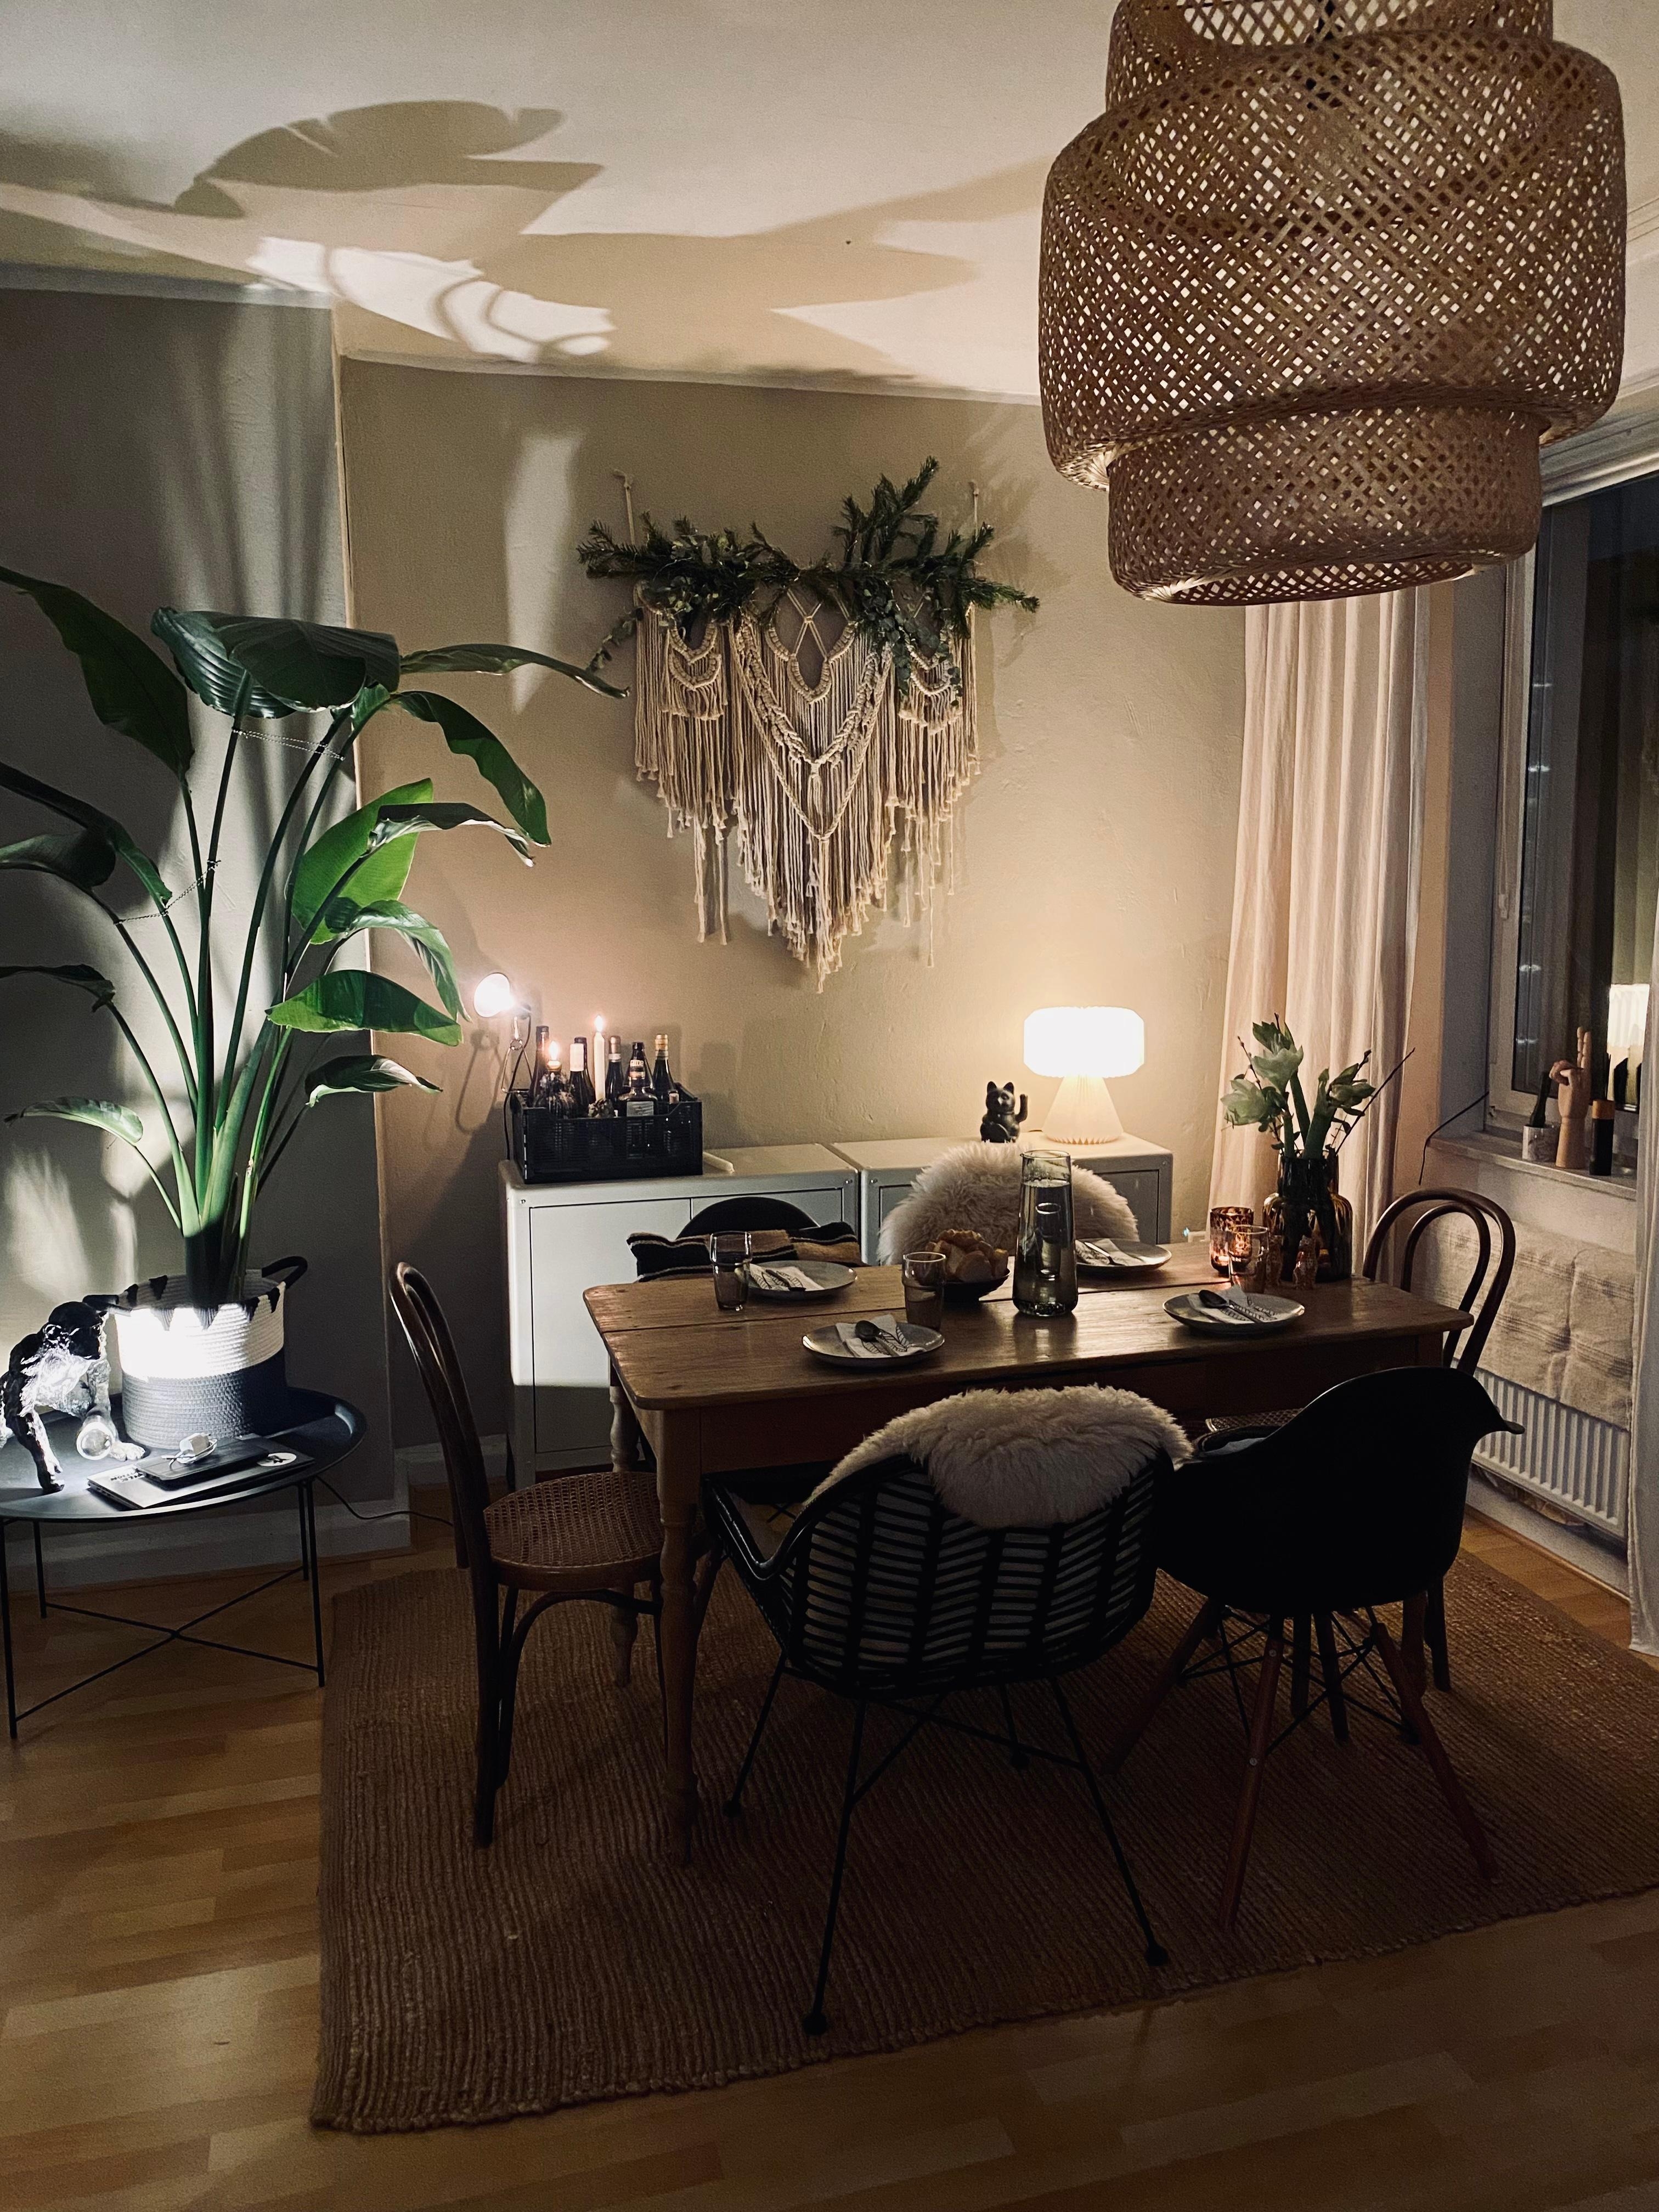 Friends Dinner Night ✨ 
#livingroom #januar #chilisincarne #dinnerwithfriends #lights #strelizie 